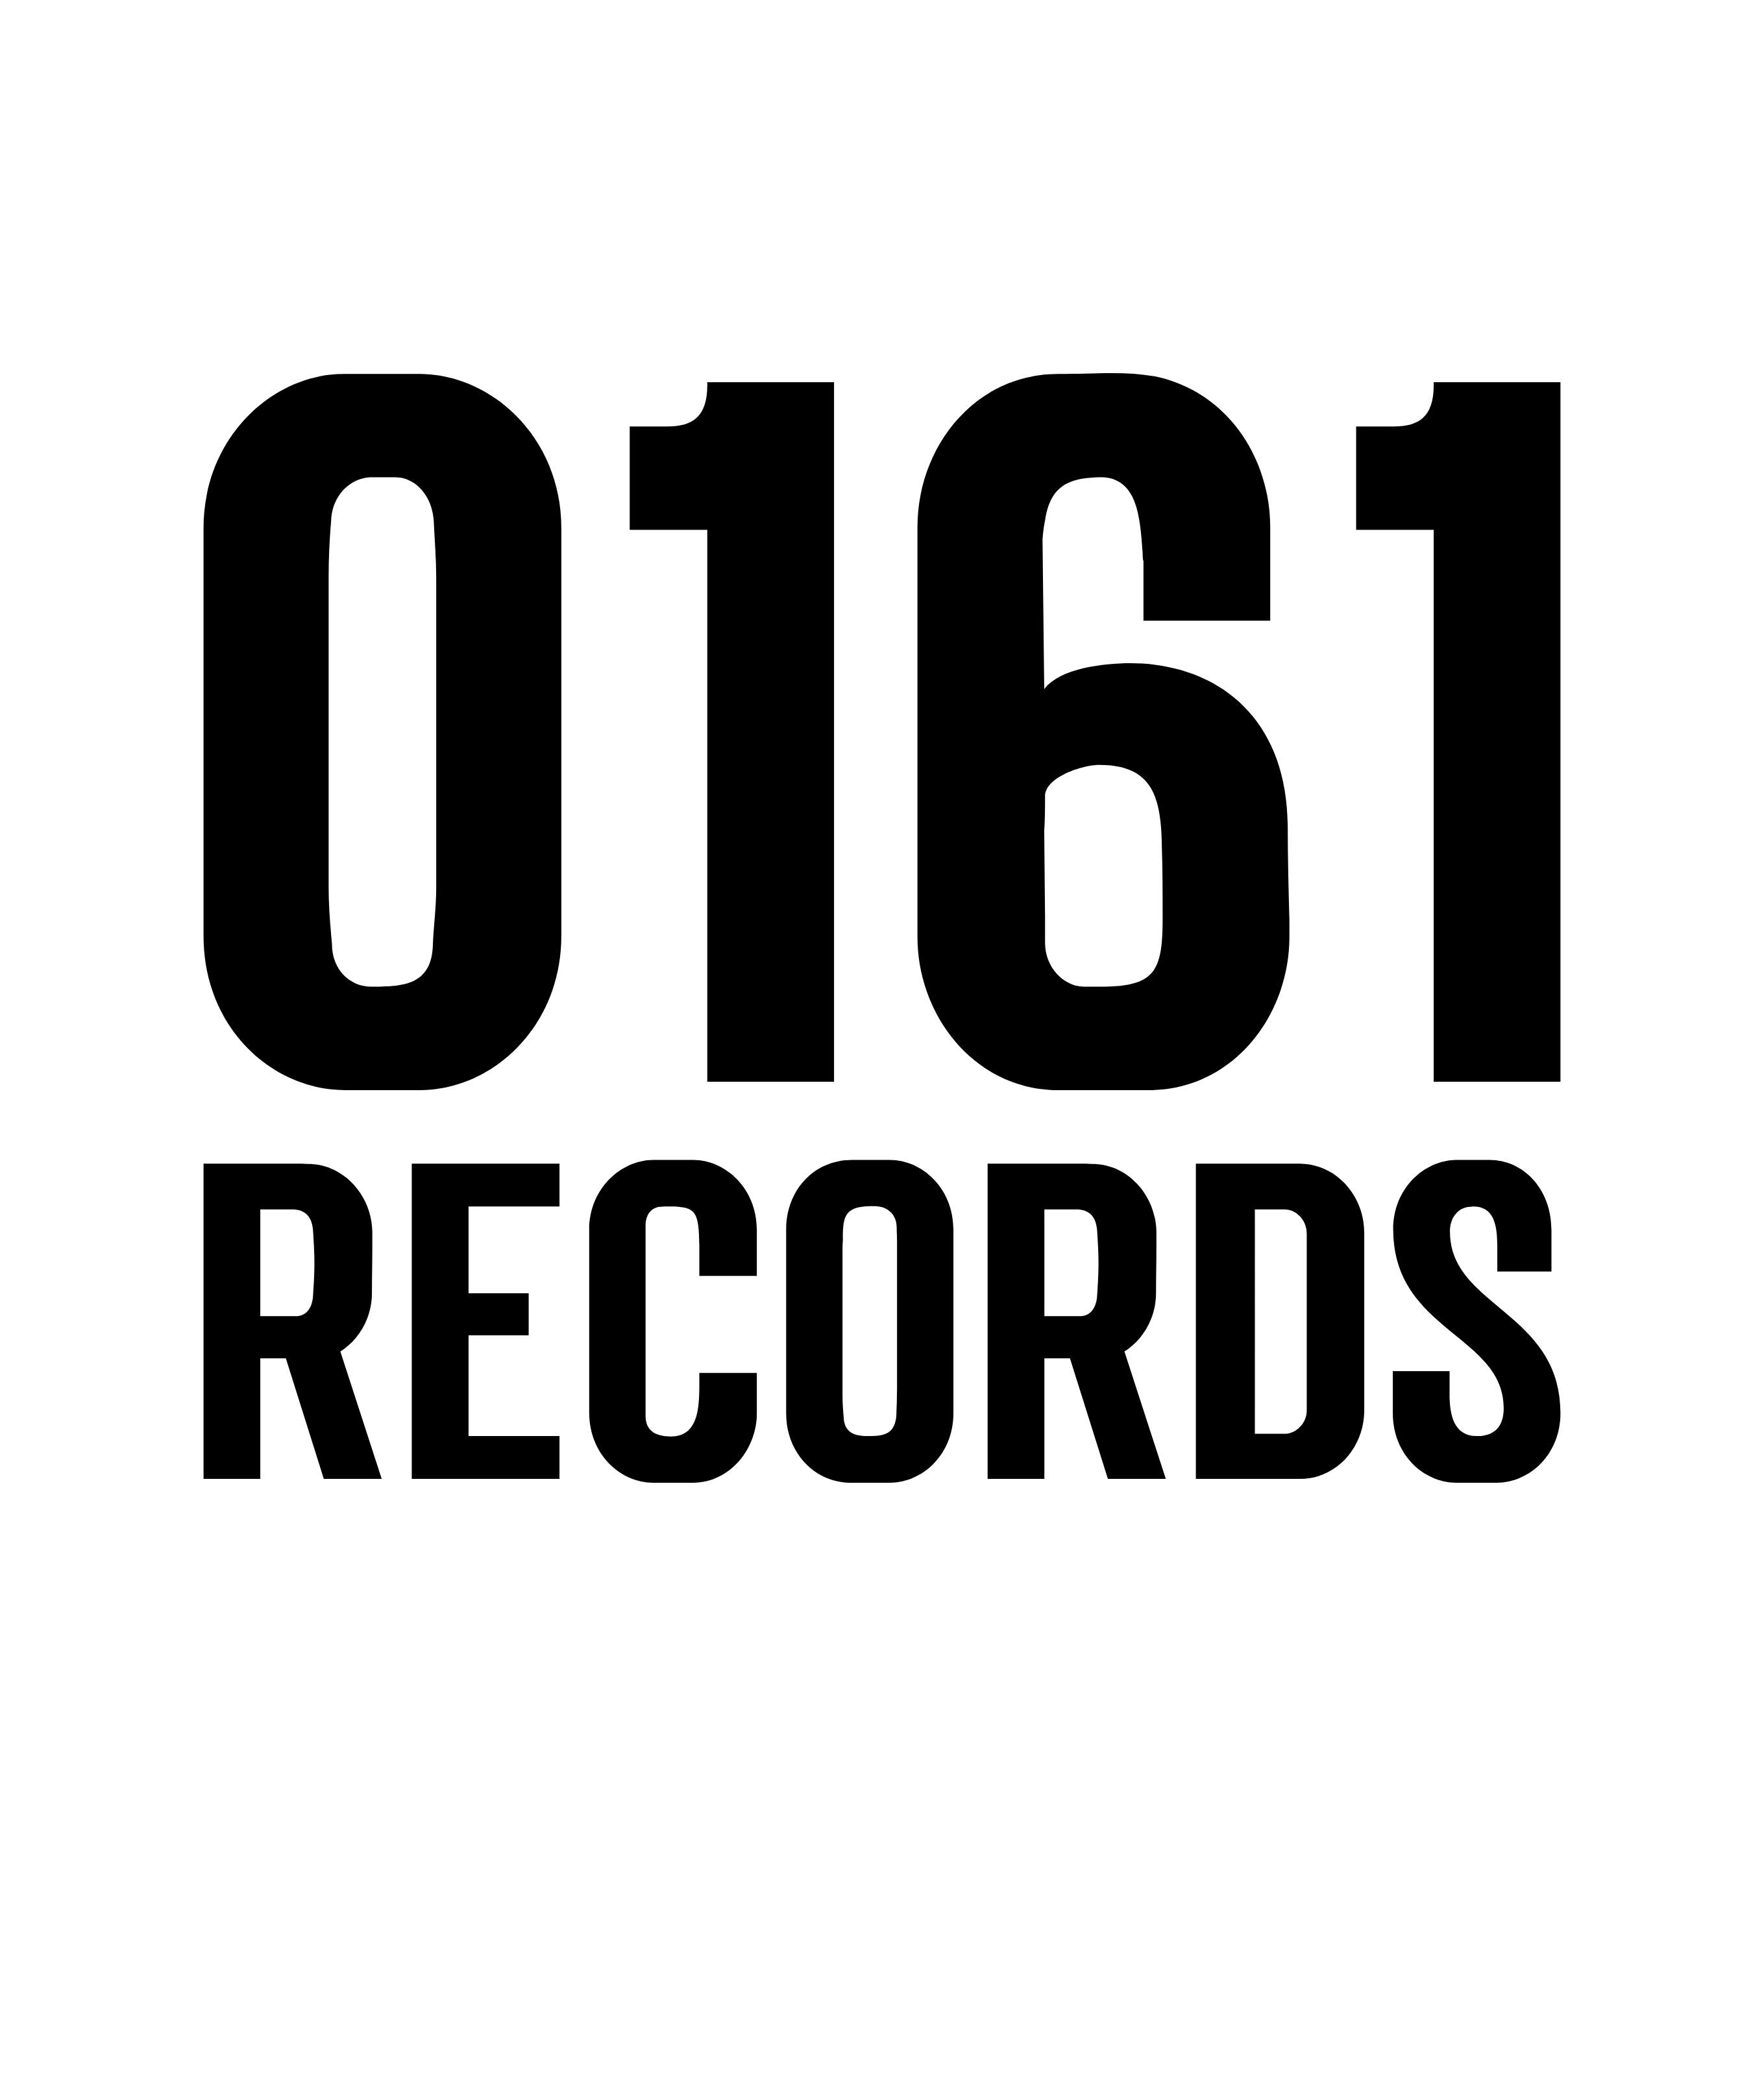 0161 Records